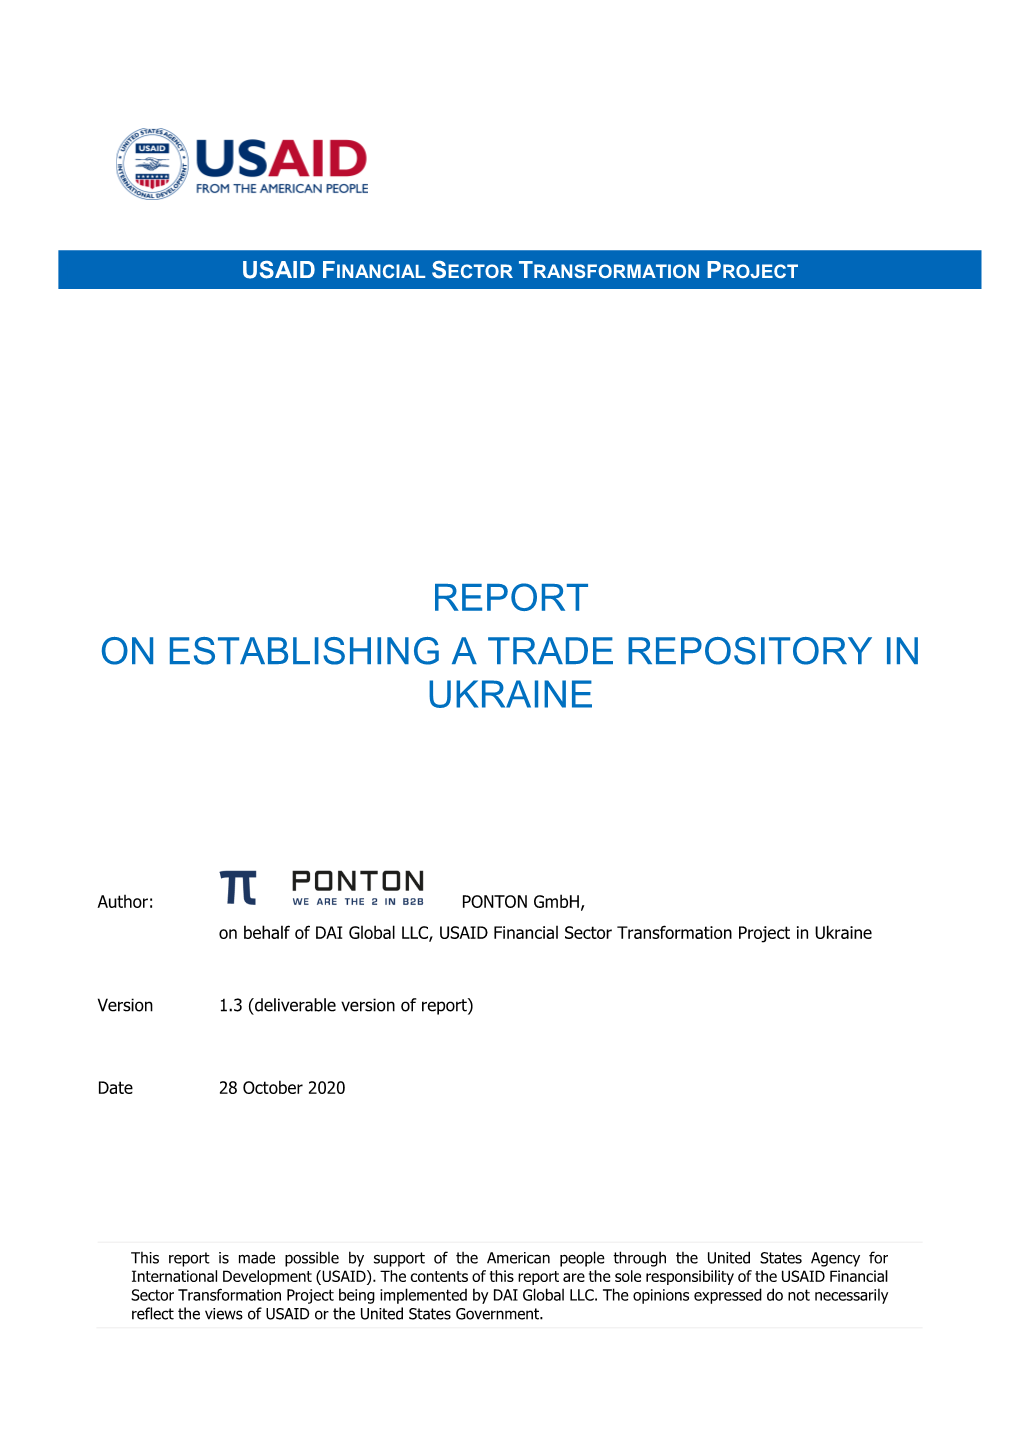 Report on Establishing a Trade Repository in Ukraine